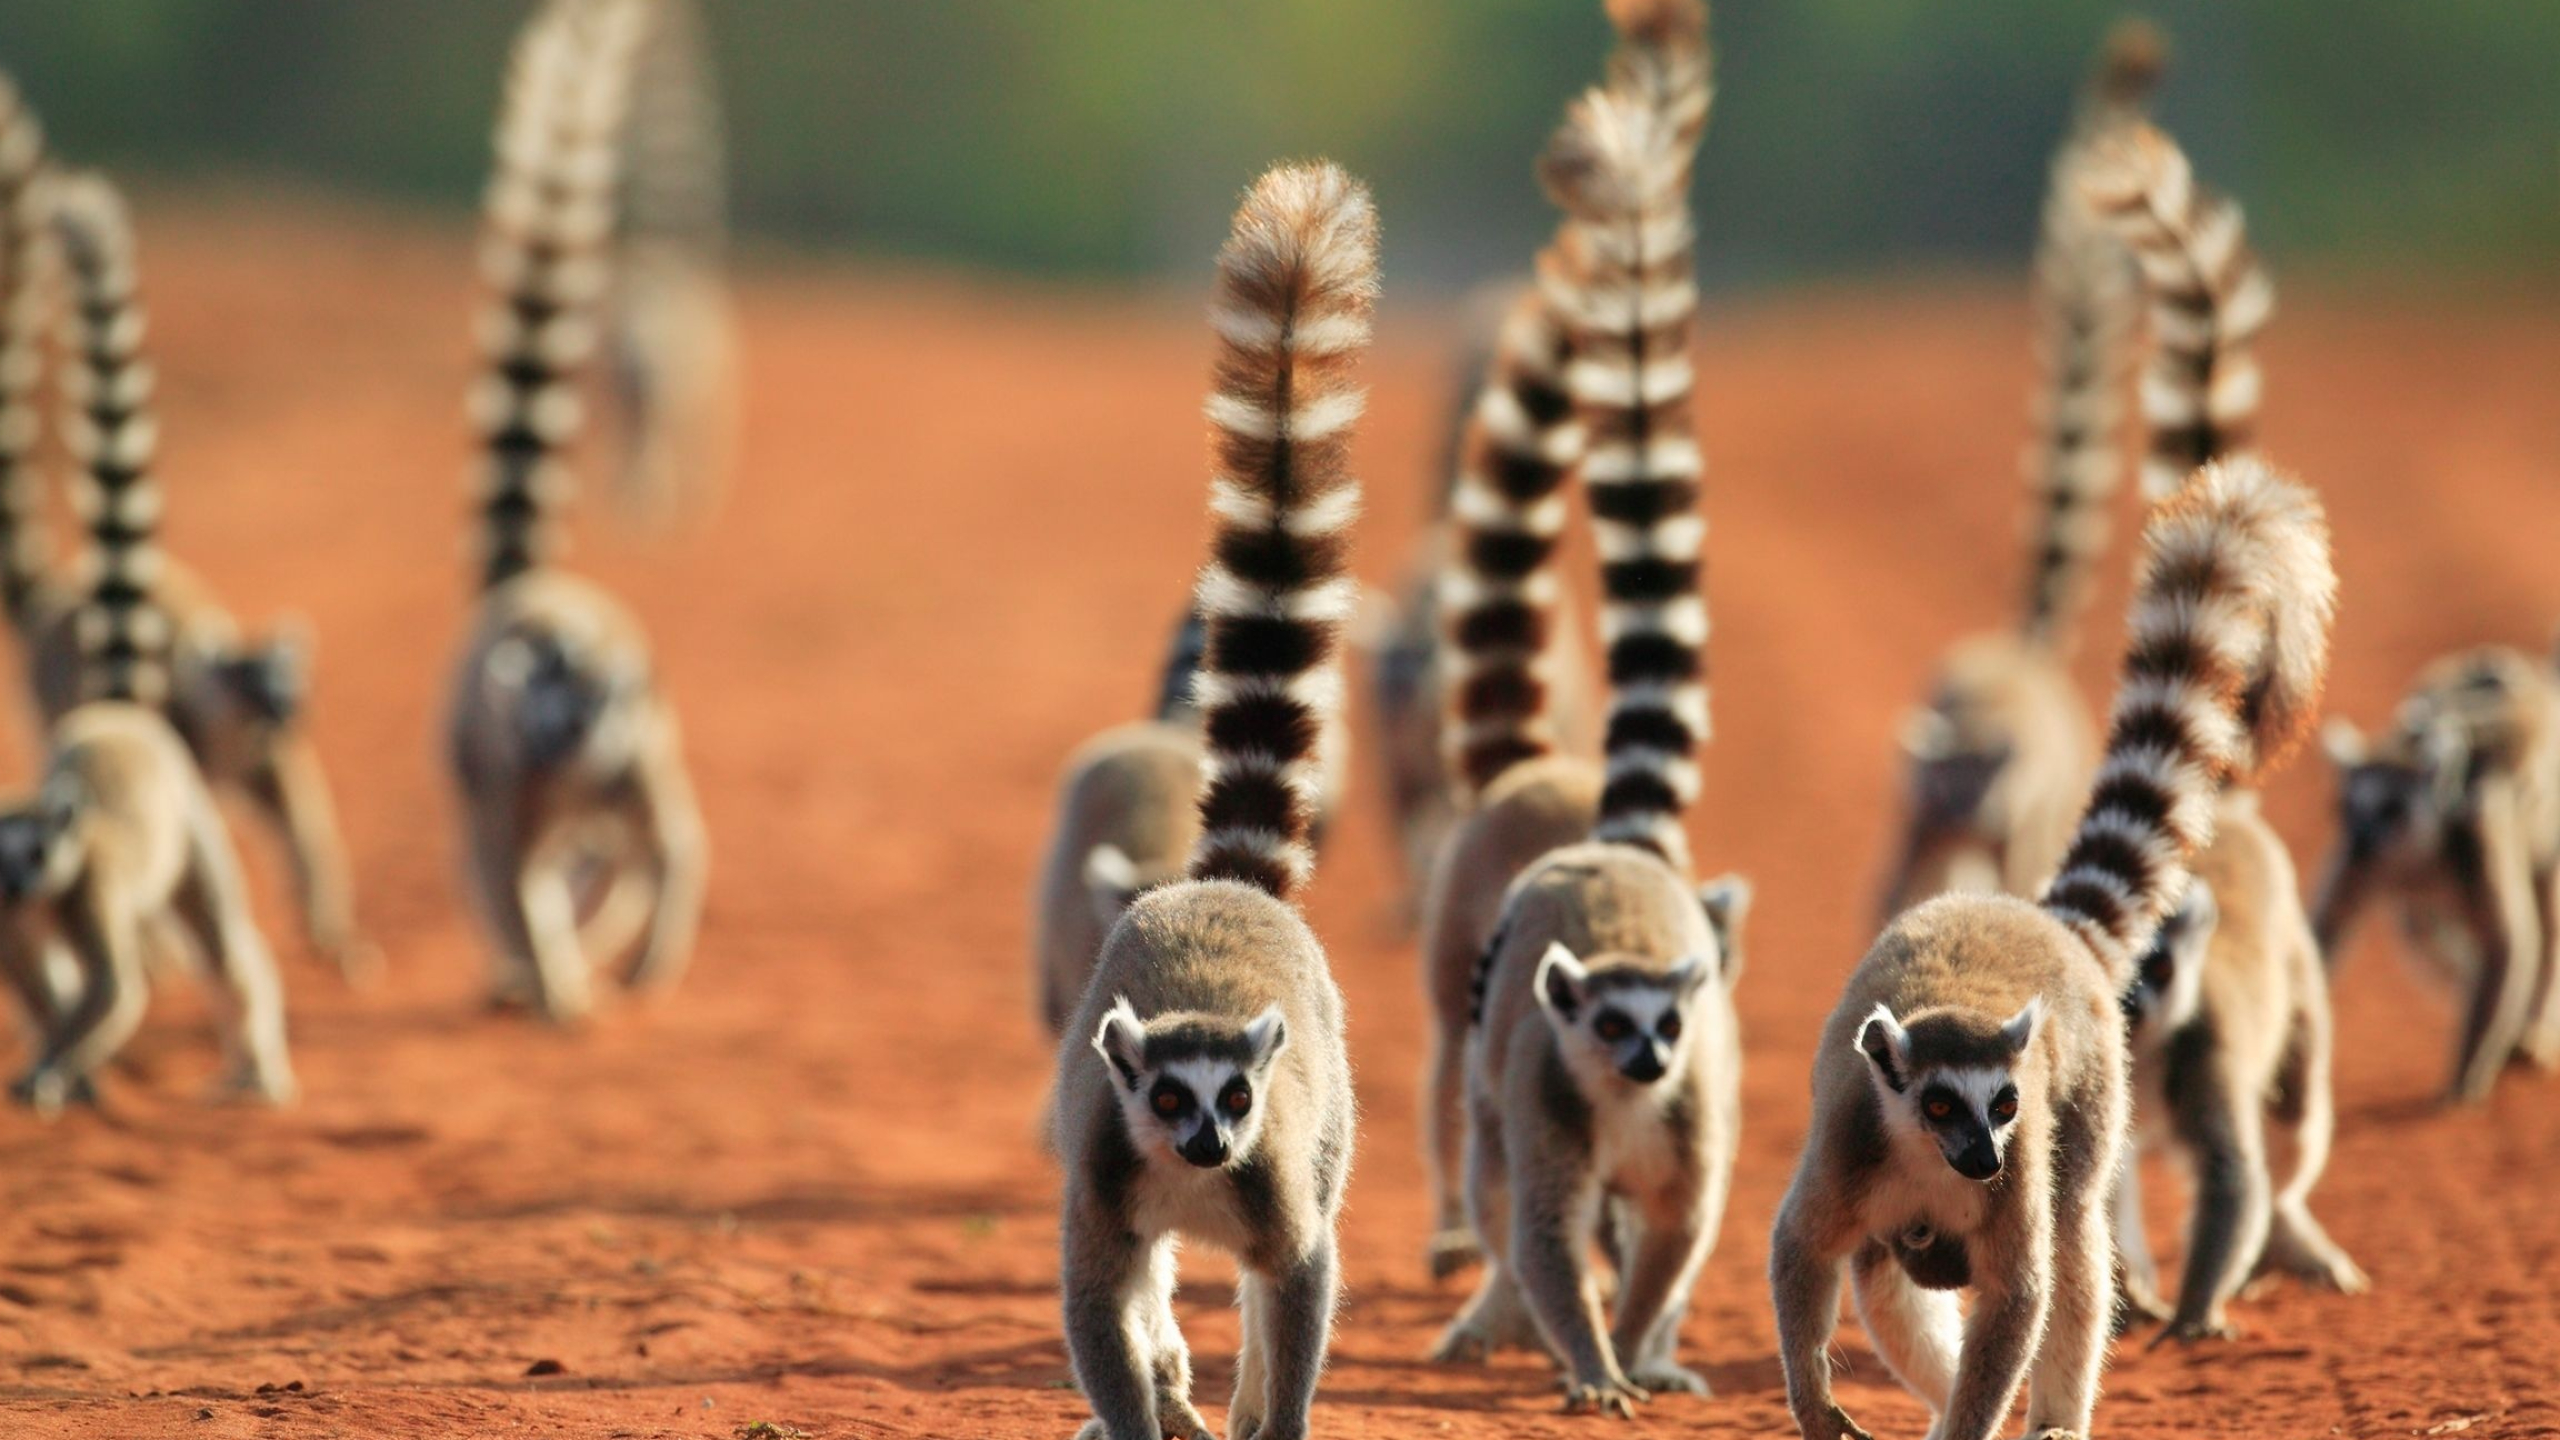 Ring Tailed Lemur, Berenty Private Reserve, Madagascar wildlife, Superstock photography, 2560x1440 HD Desktop